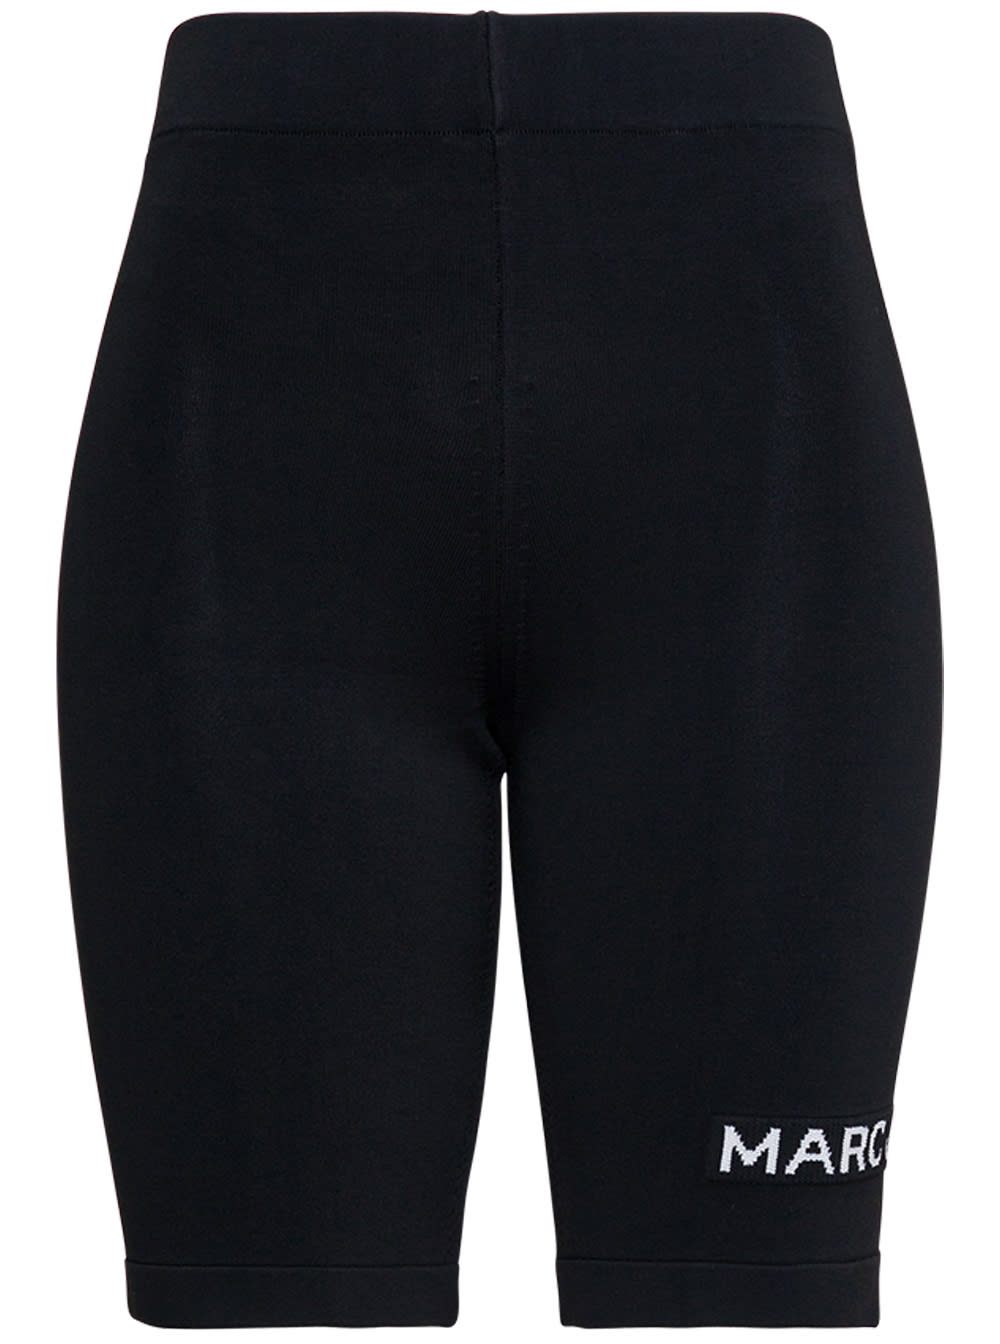 Marc Jacobs Black Stretch Fabric Cyclist Shorts With Logo Print